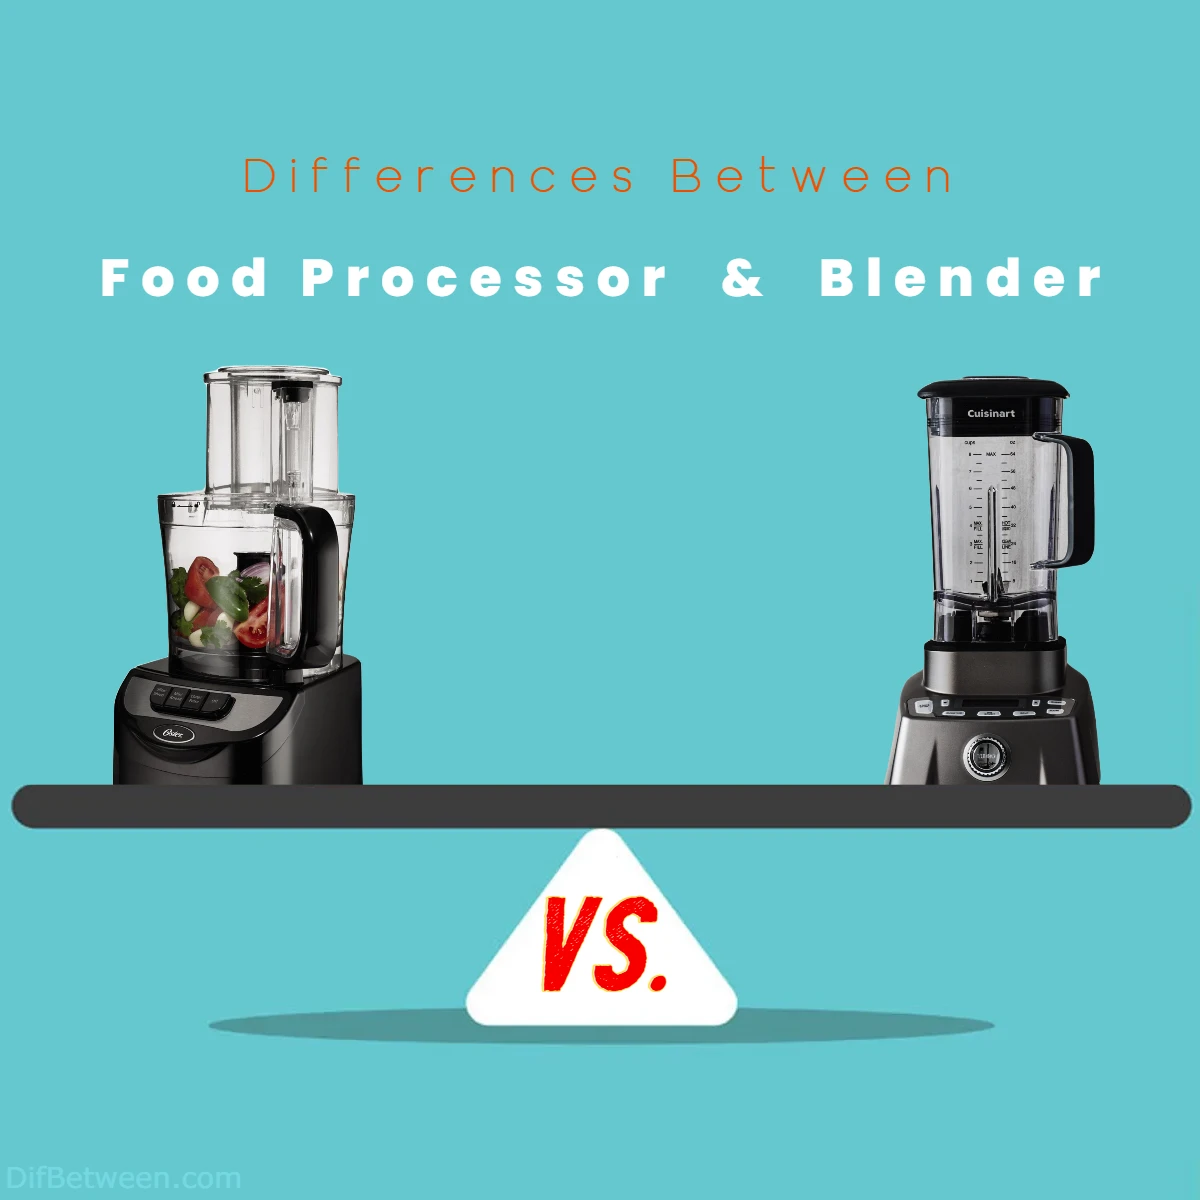 Differences Between Food Processor vs Blender